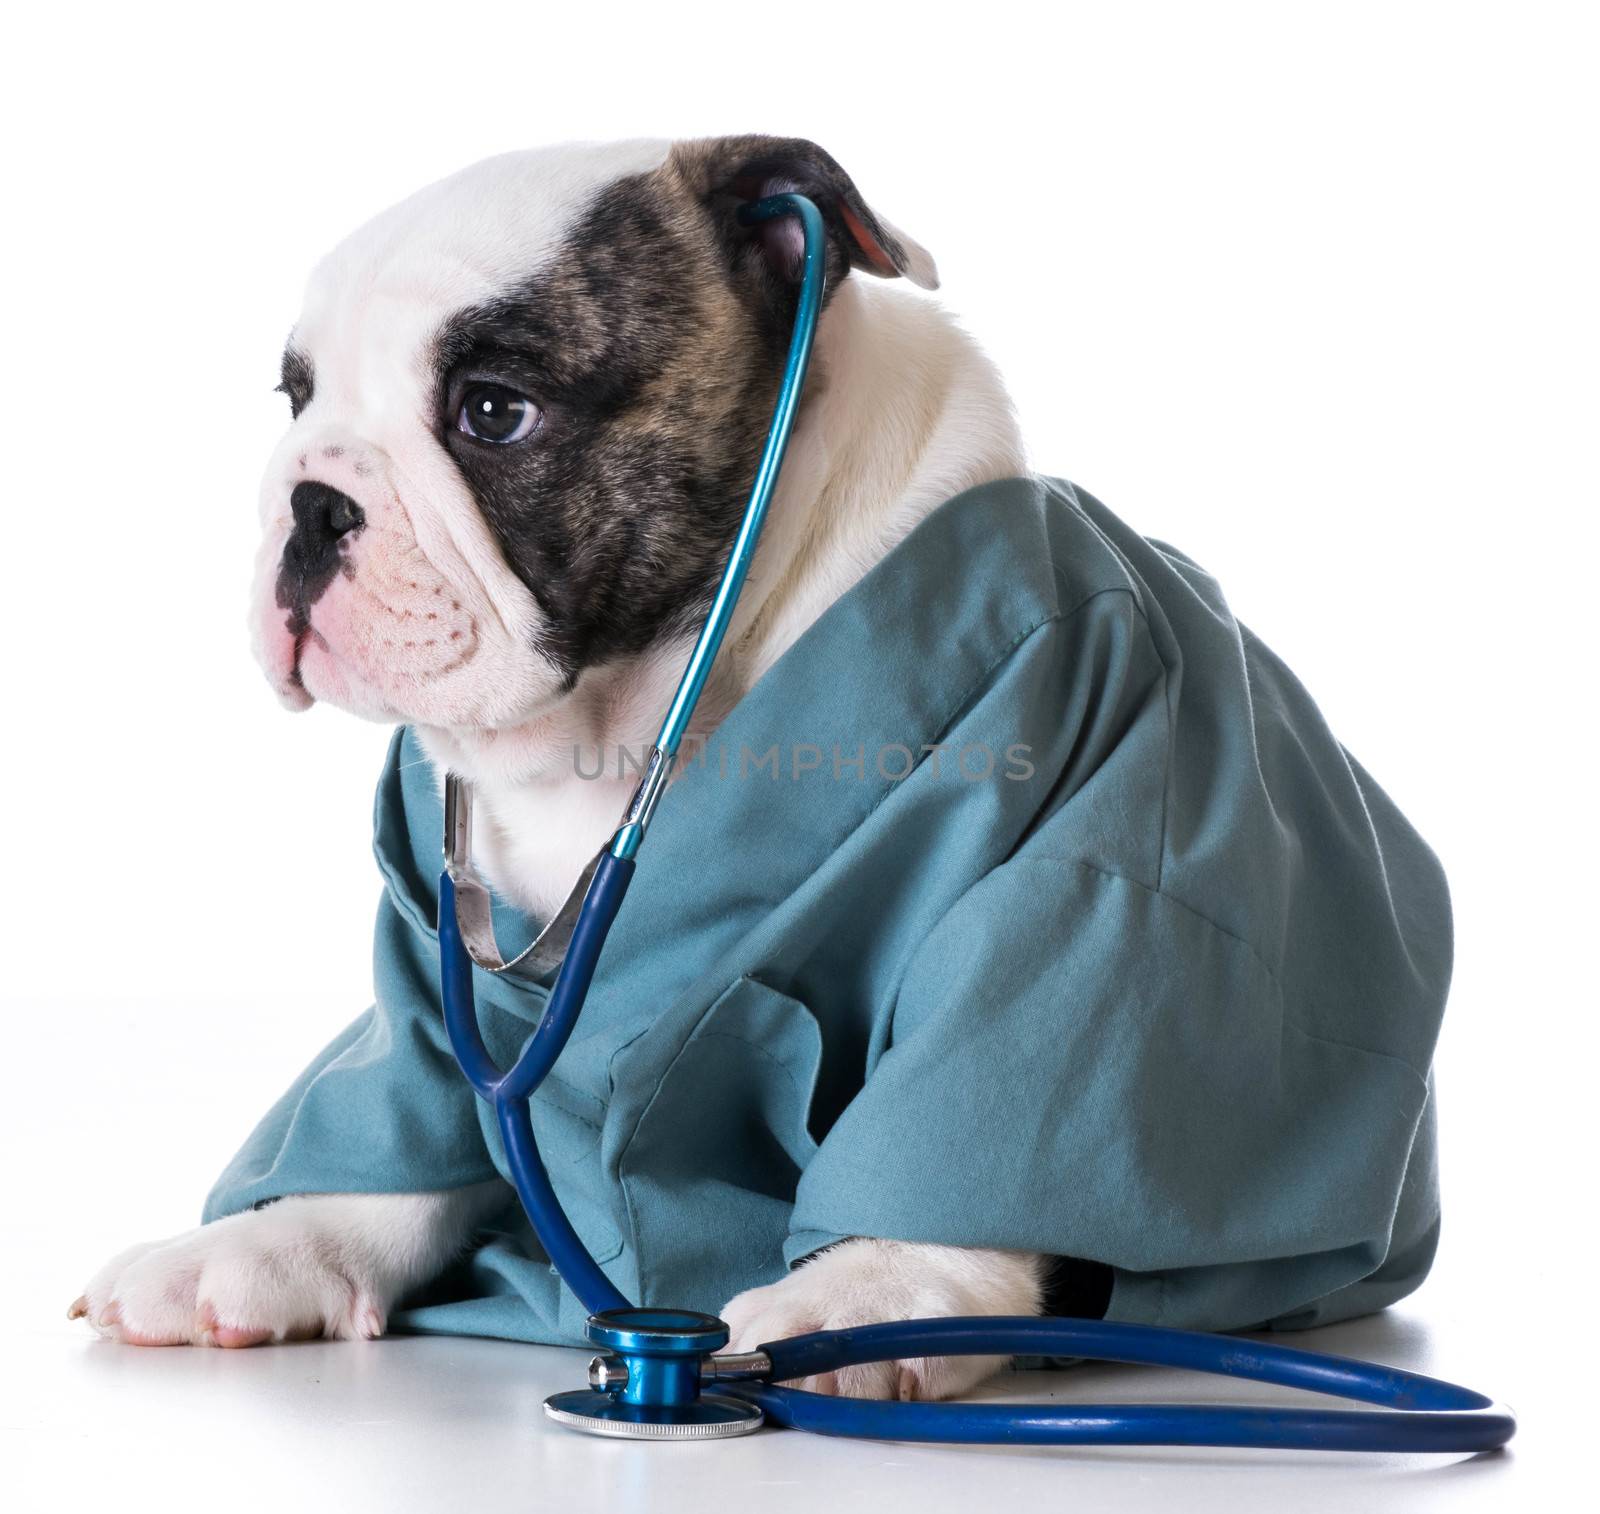 veterinary care - bulldog dressed up like a vet on white background